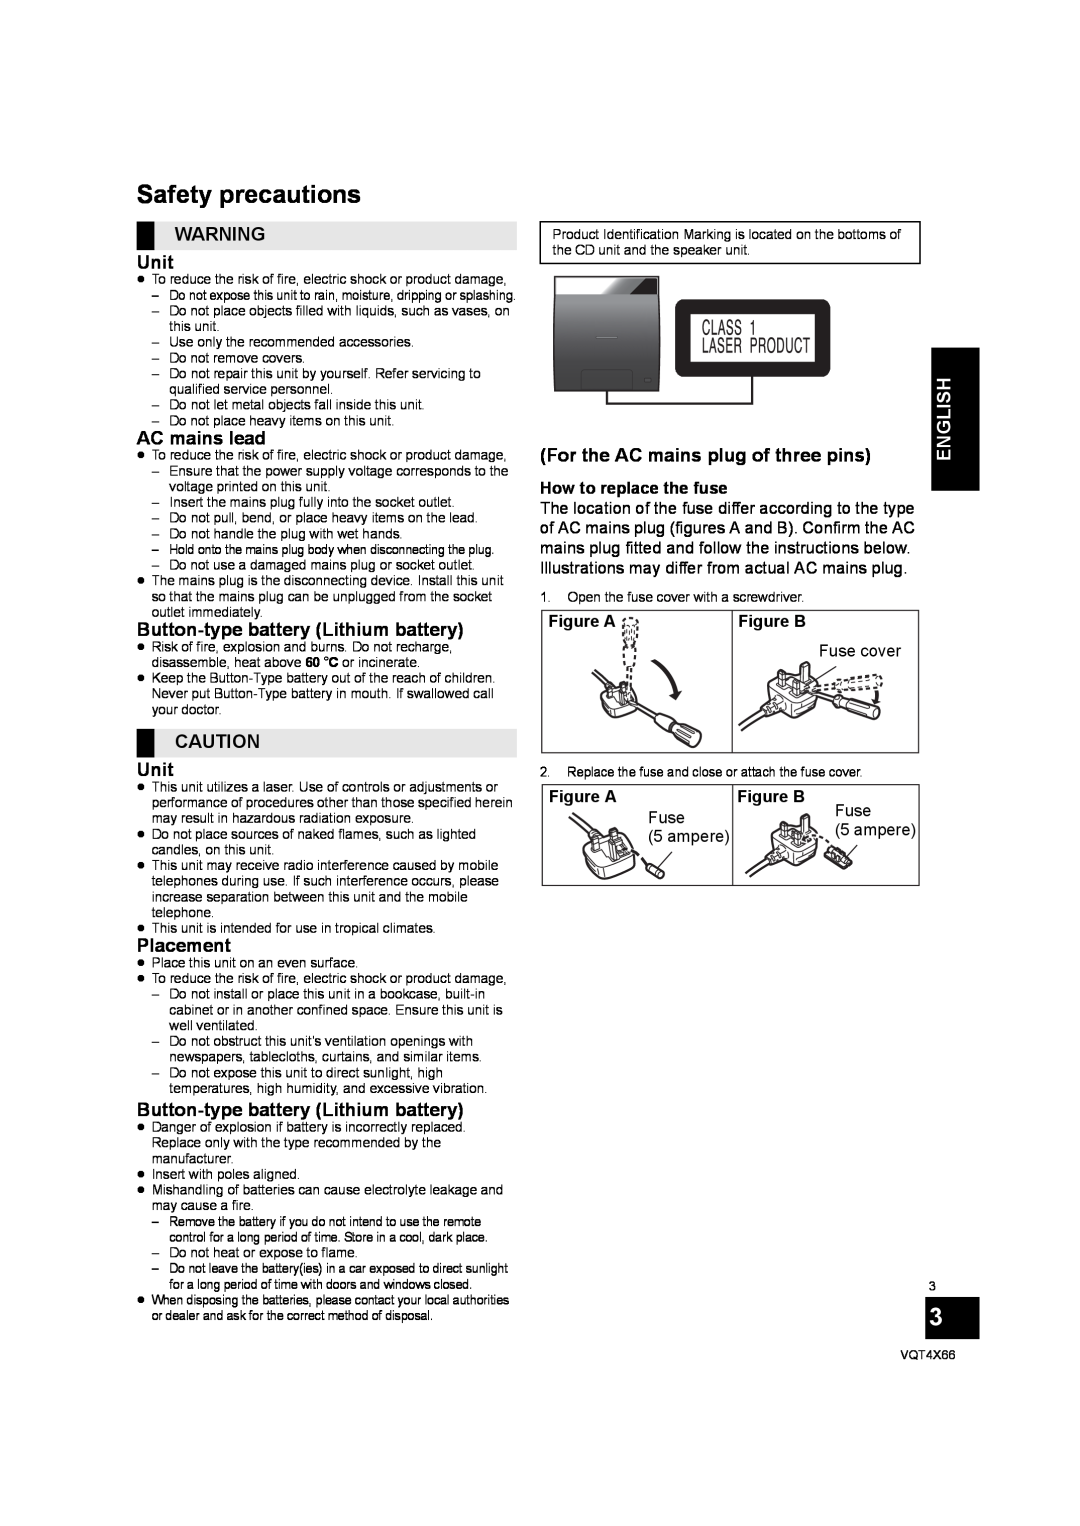 Panasonic SC-NE5 Safety precautions, Unit, AC mains lead, Button-typebattery Lithium battery, Placement, English 